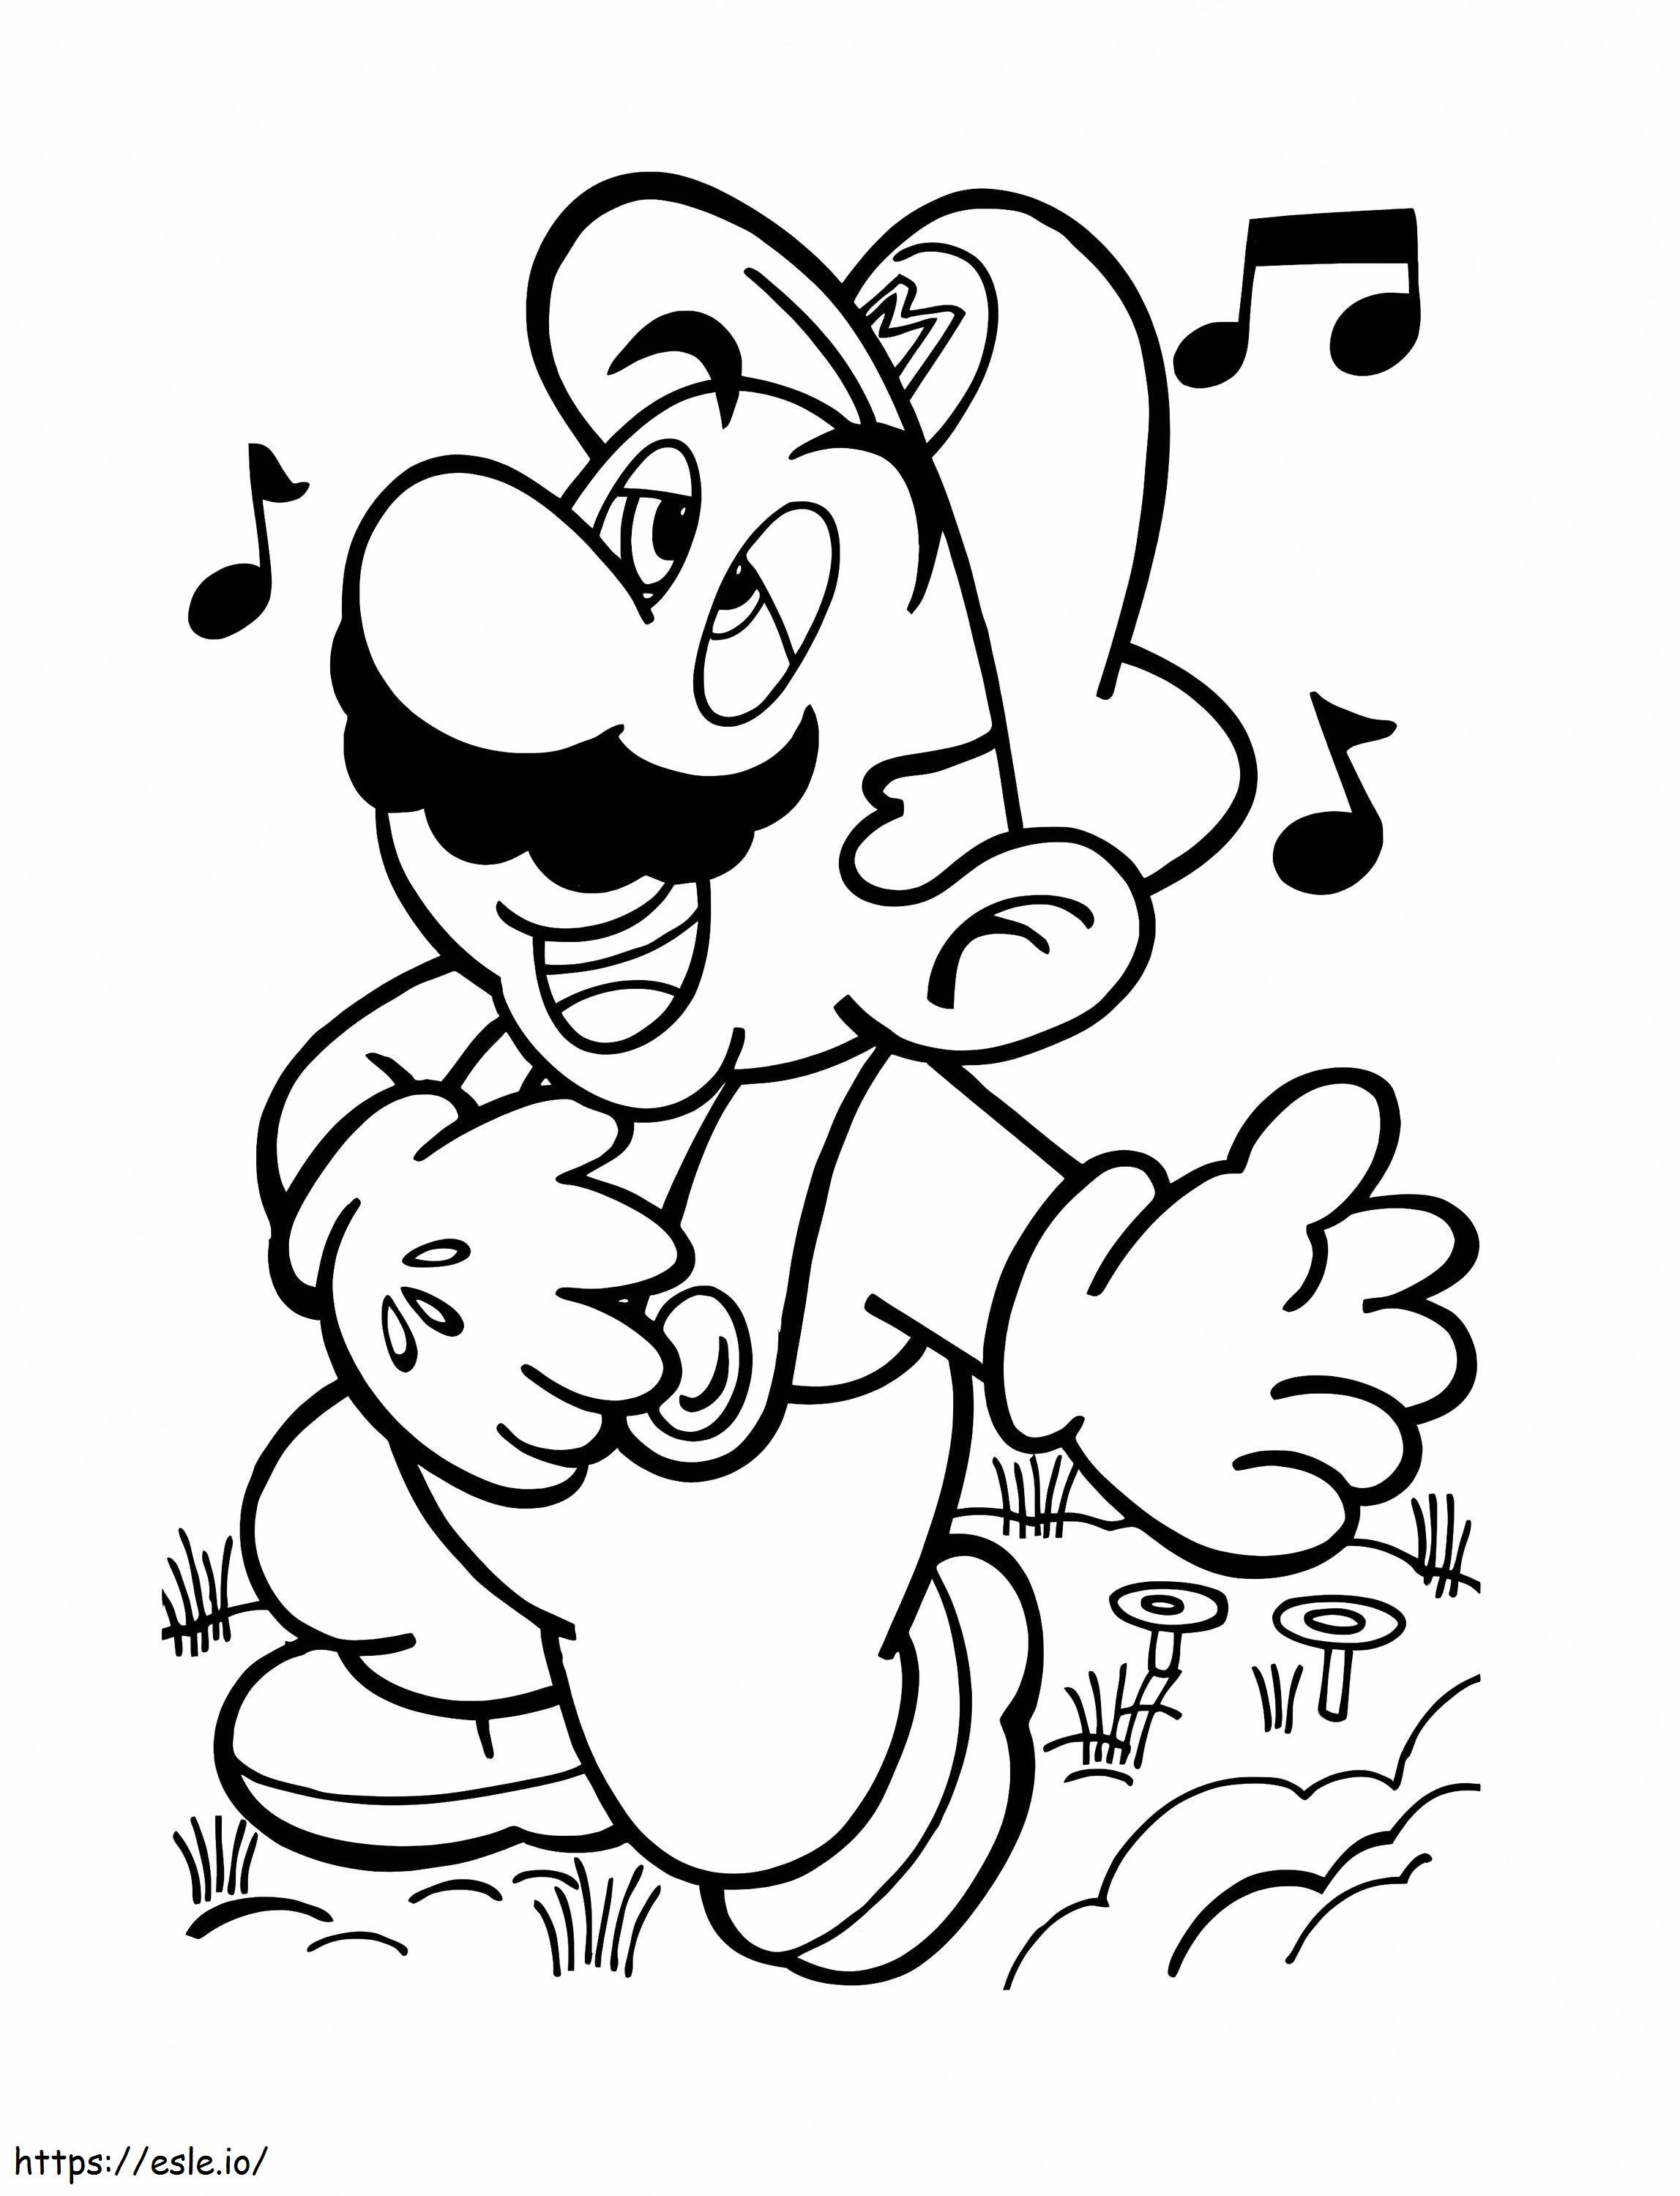 Coloriage Mario chantant à imprimer dessin